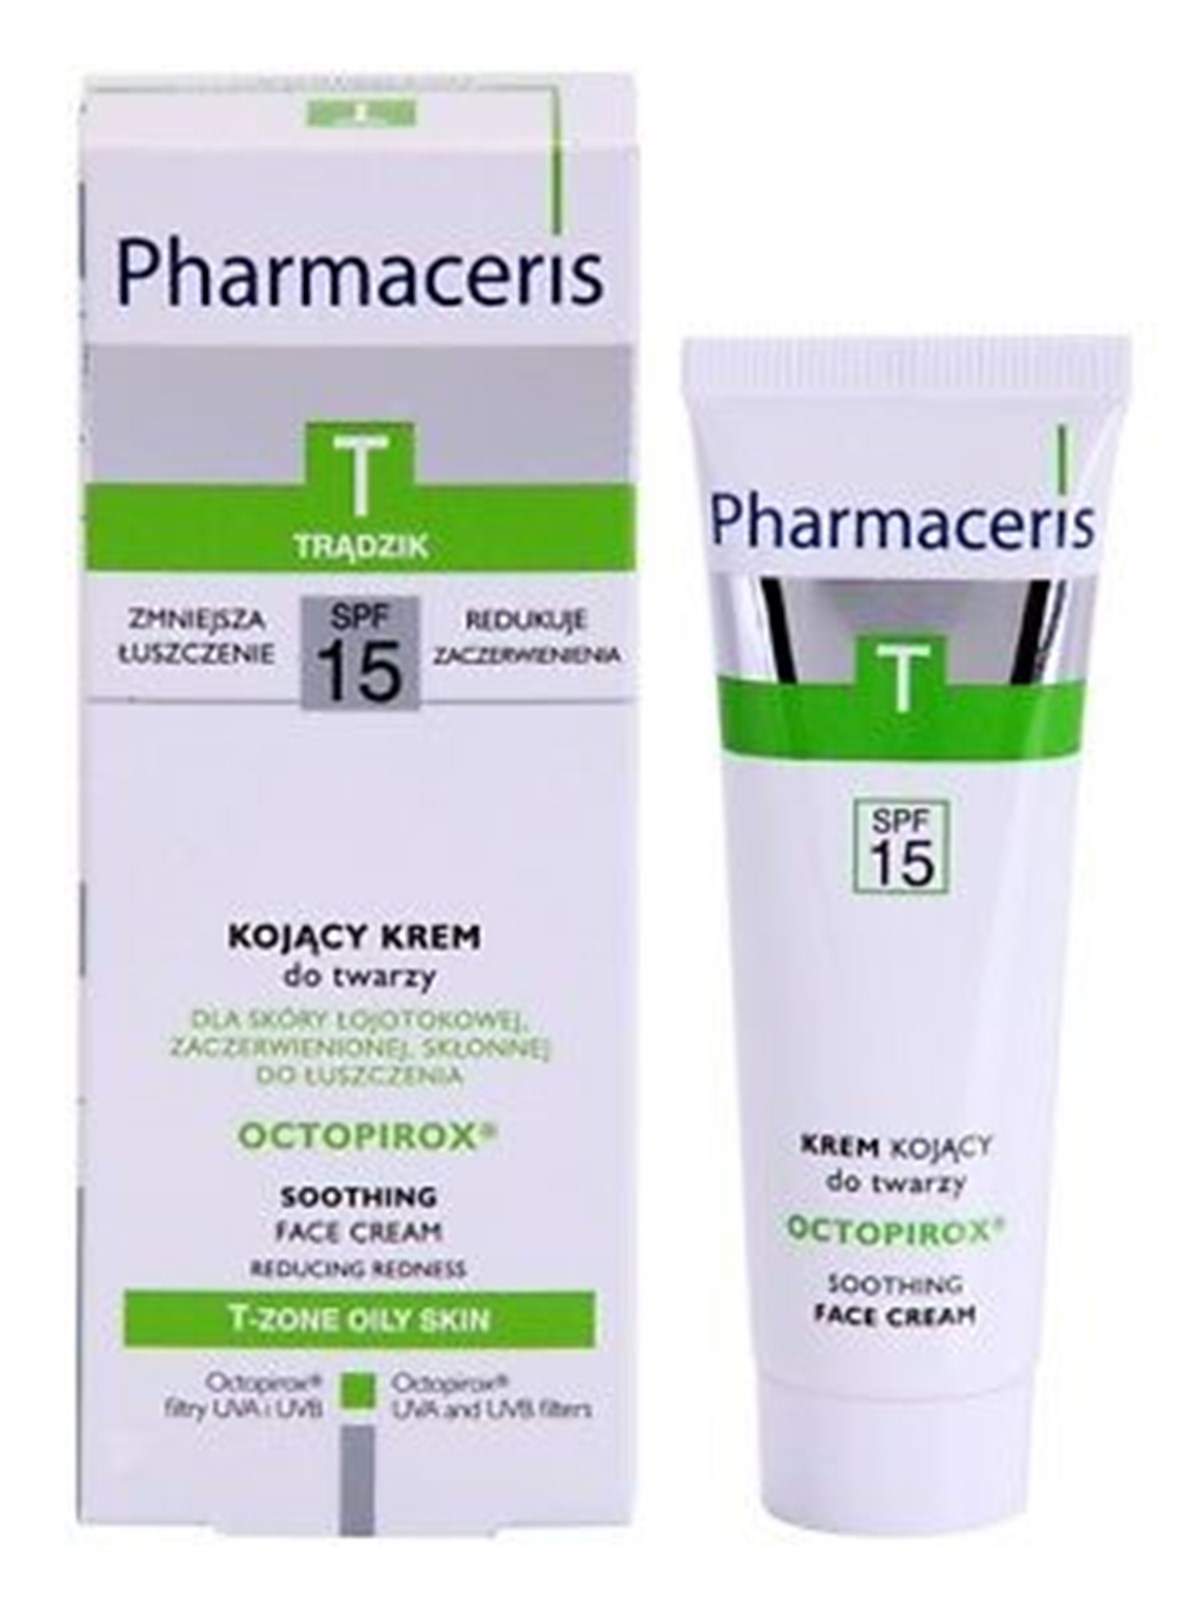 Pharmaceris T Octopirox Soothing Face Cream 30ml